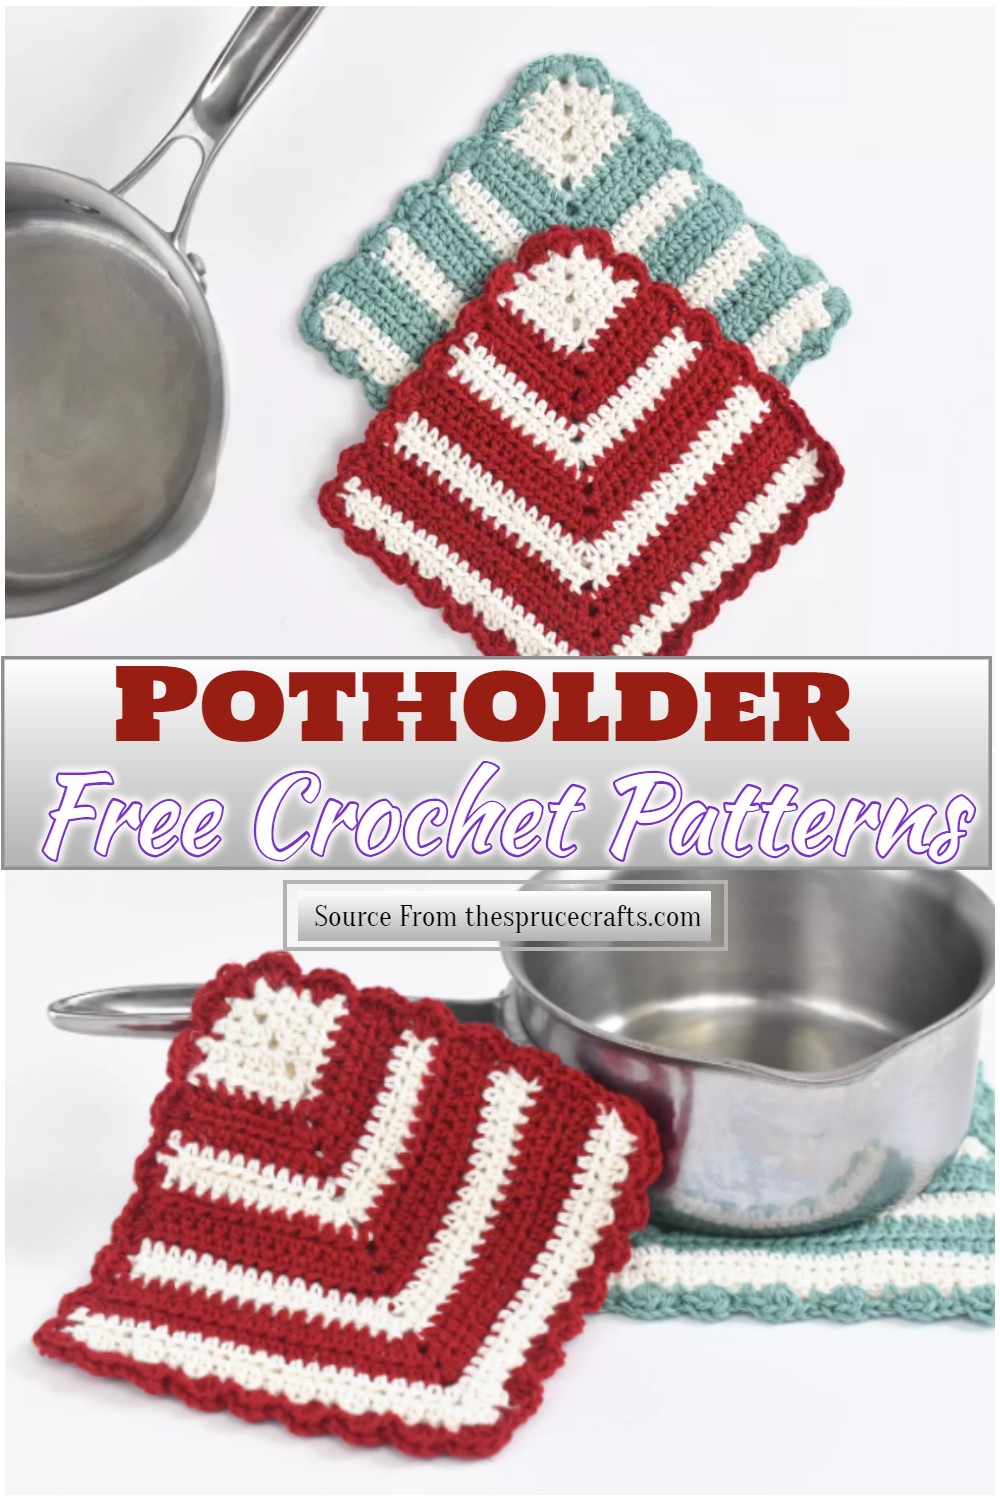 Free Crochet Potholder Pattern